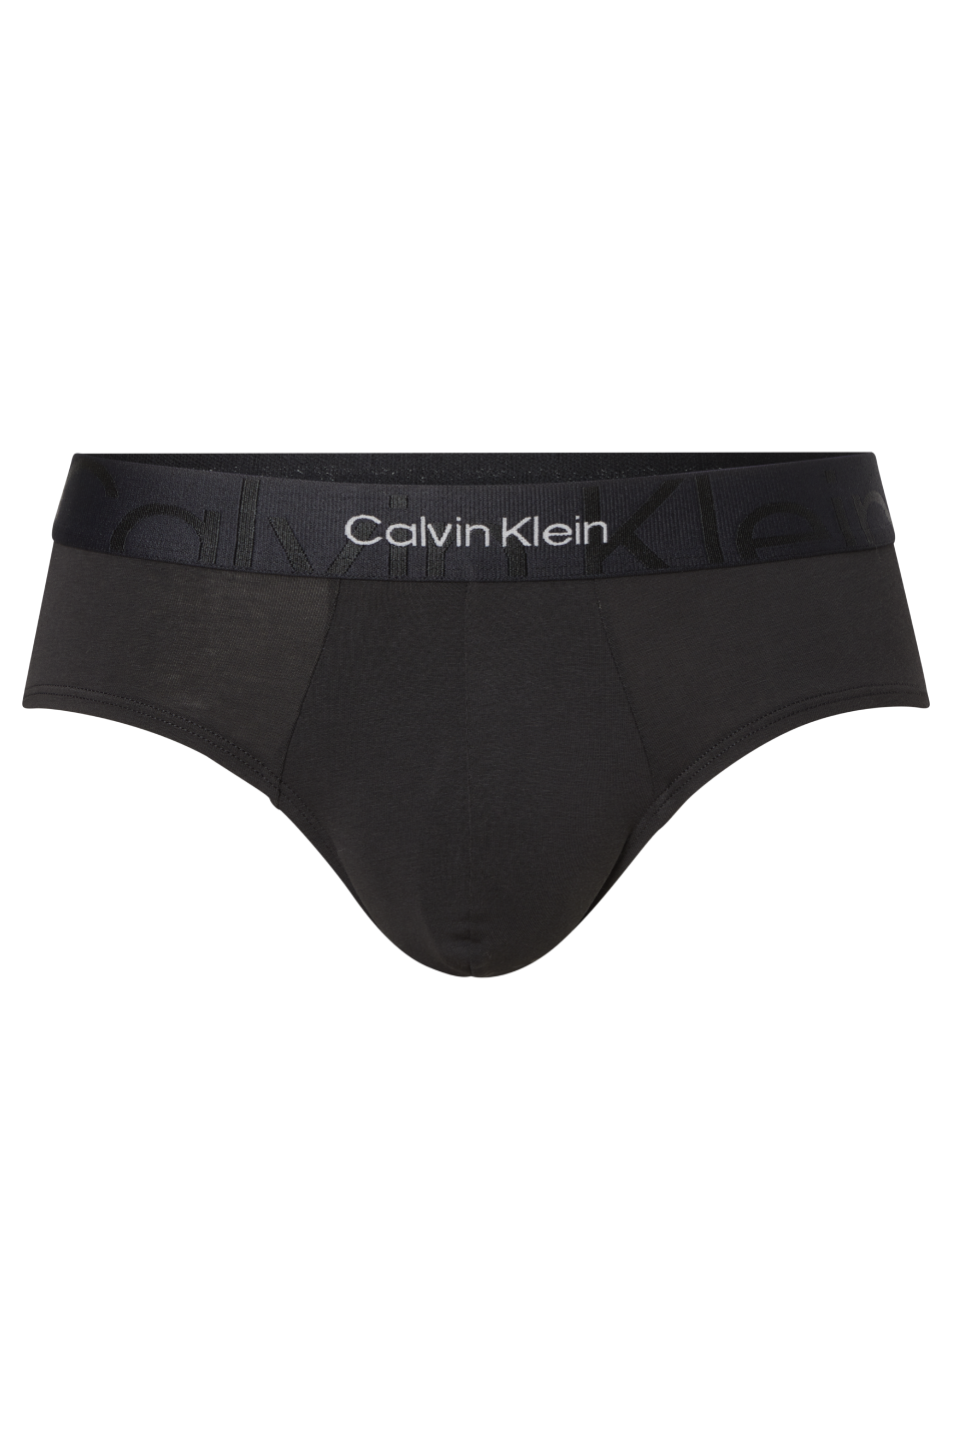 Calvin Klein Men's Recycled Cotton Stretch Big & Tall Hip Brief